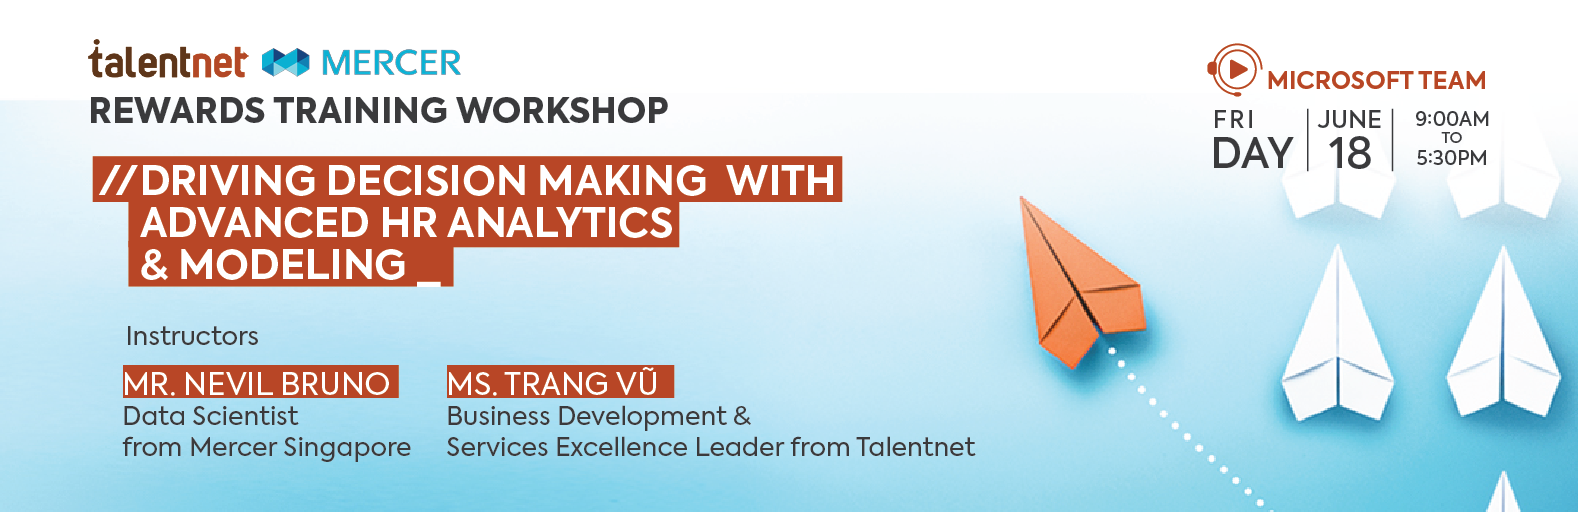 Talentnet-Mercer Rewards Training Workshop: Driving Decision Making with Advanced HR Analytics and Modeling